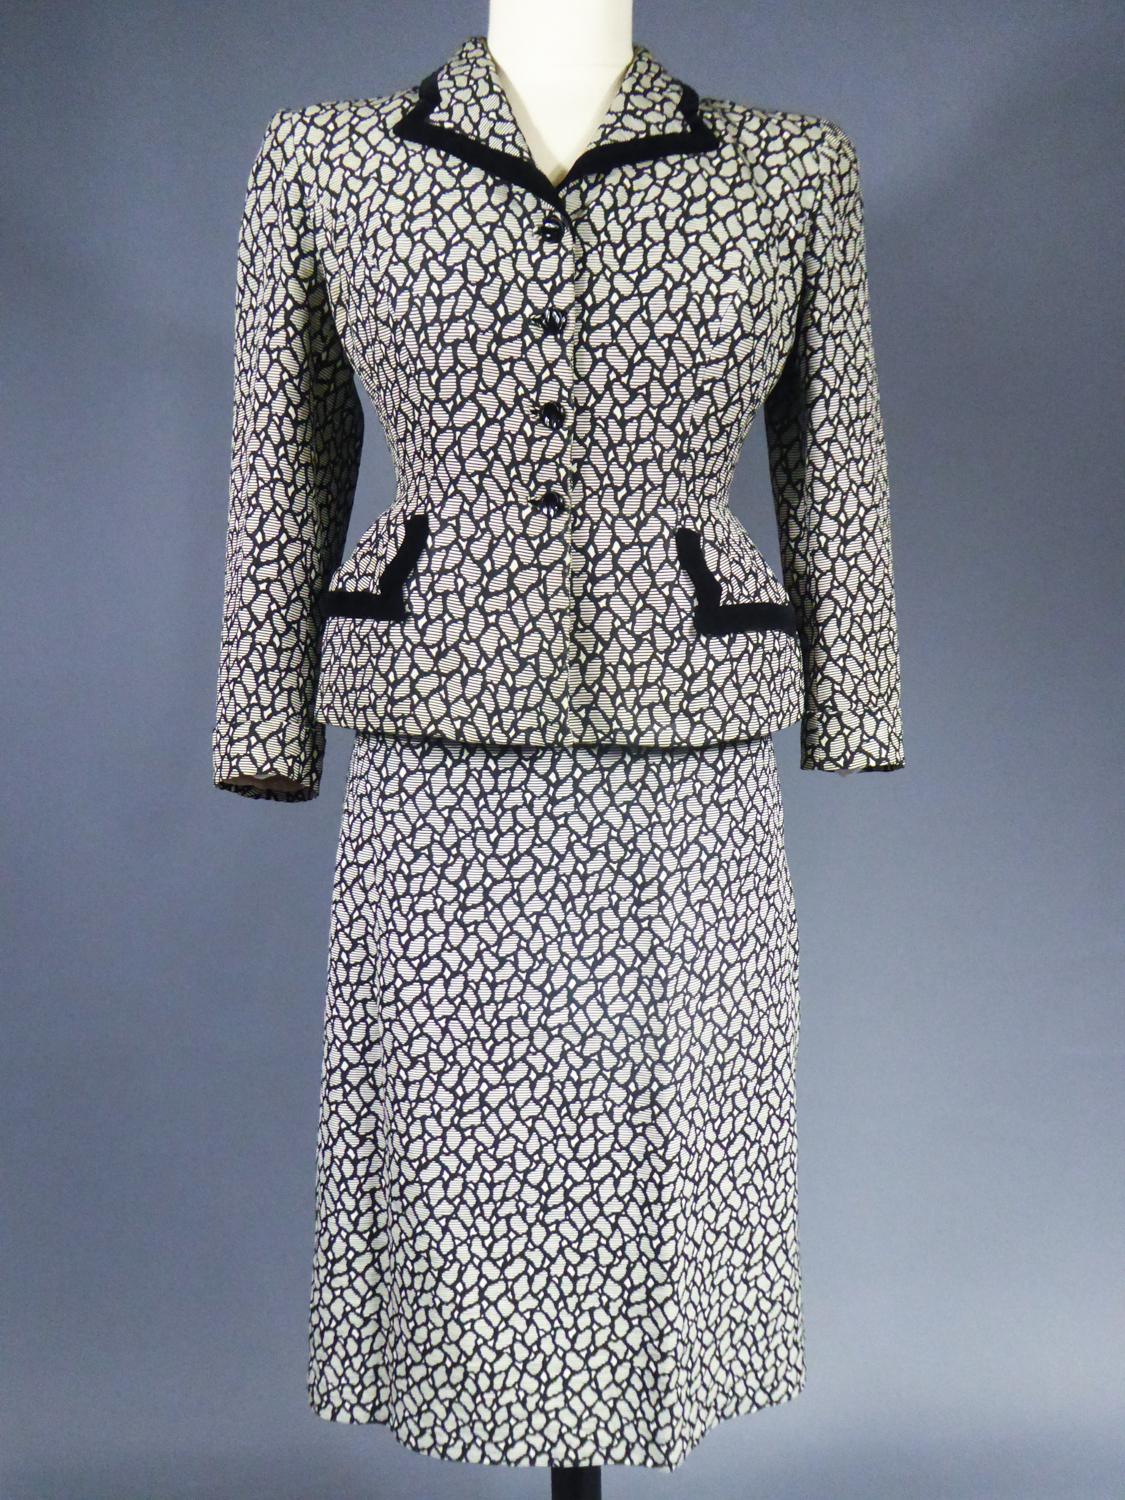 Women's New Look Bar Skirt Suit Circa 1945/1950